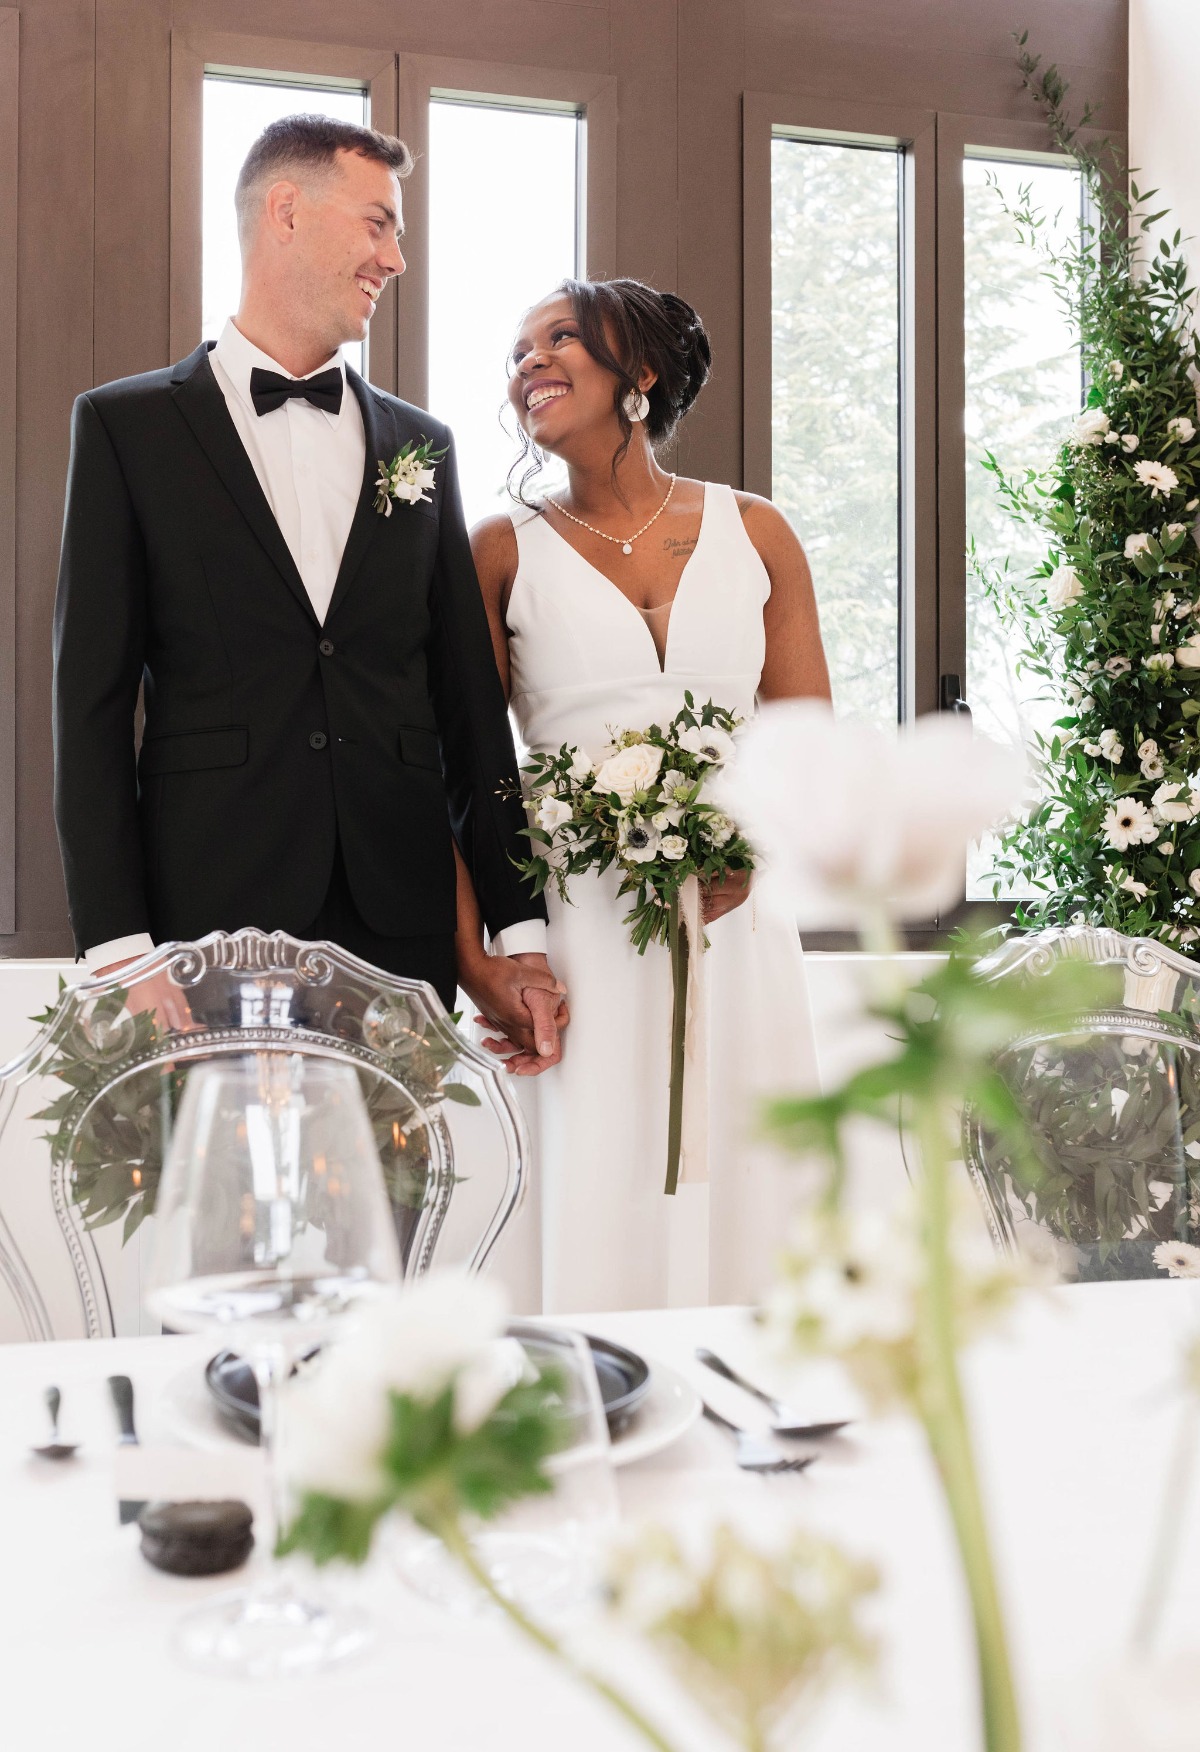 Bride looking at groom behind sweetheart table at reception